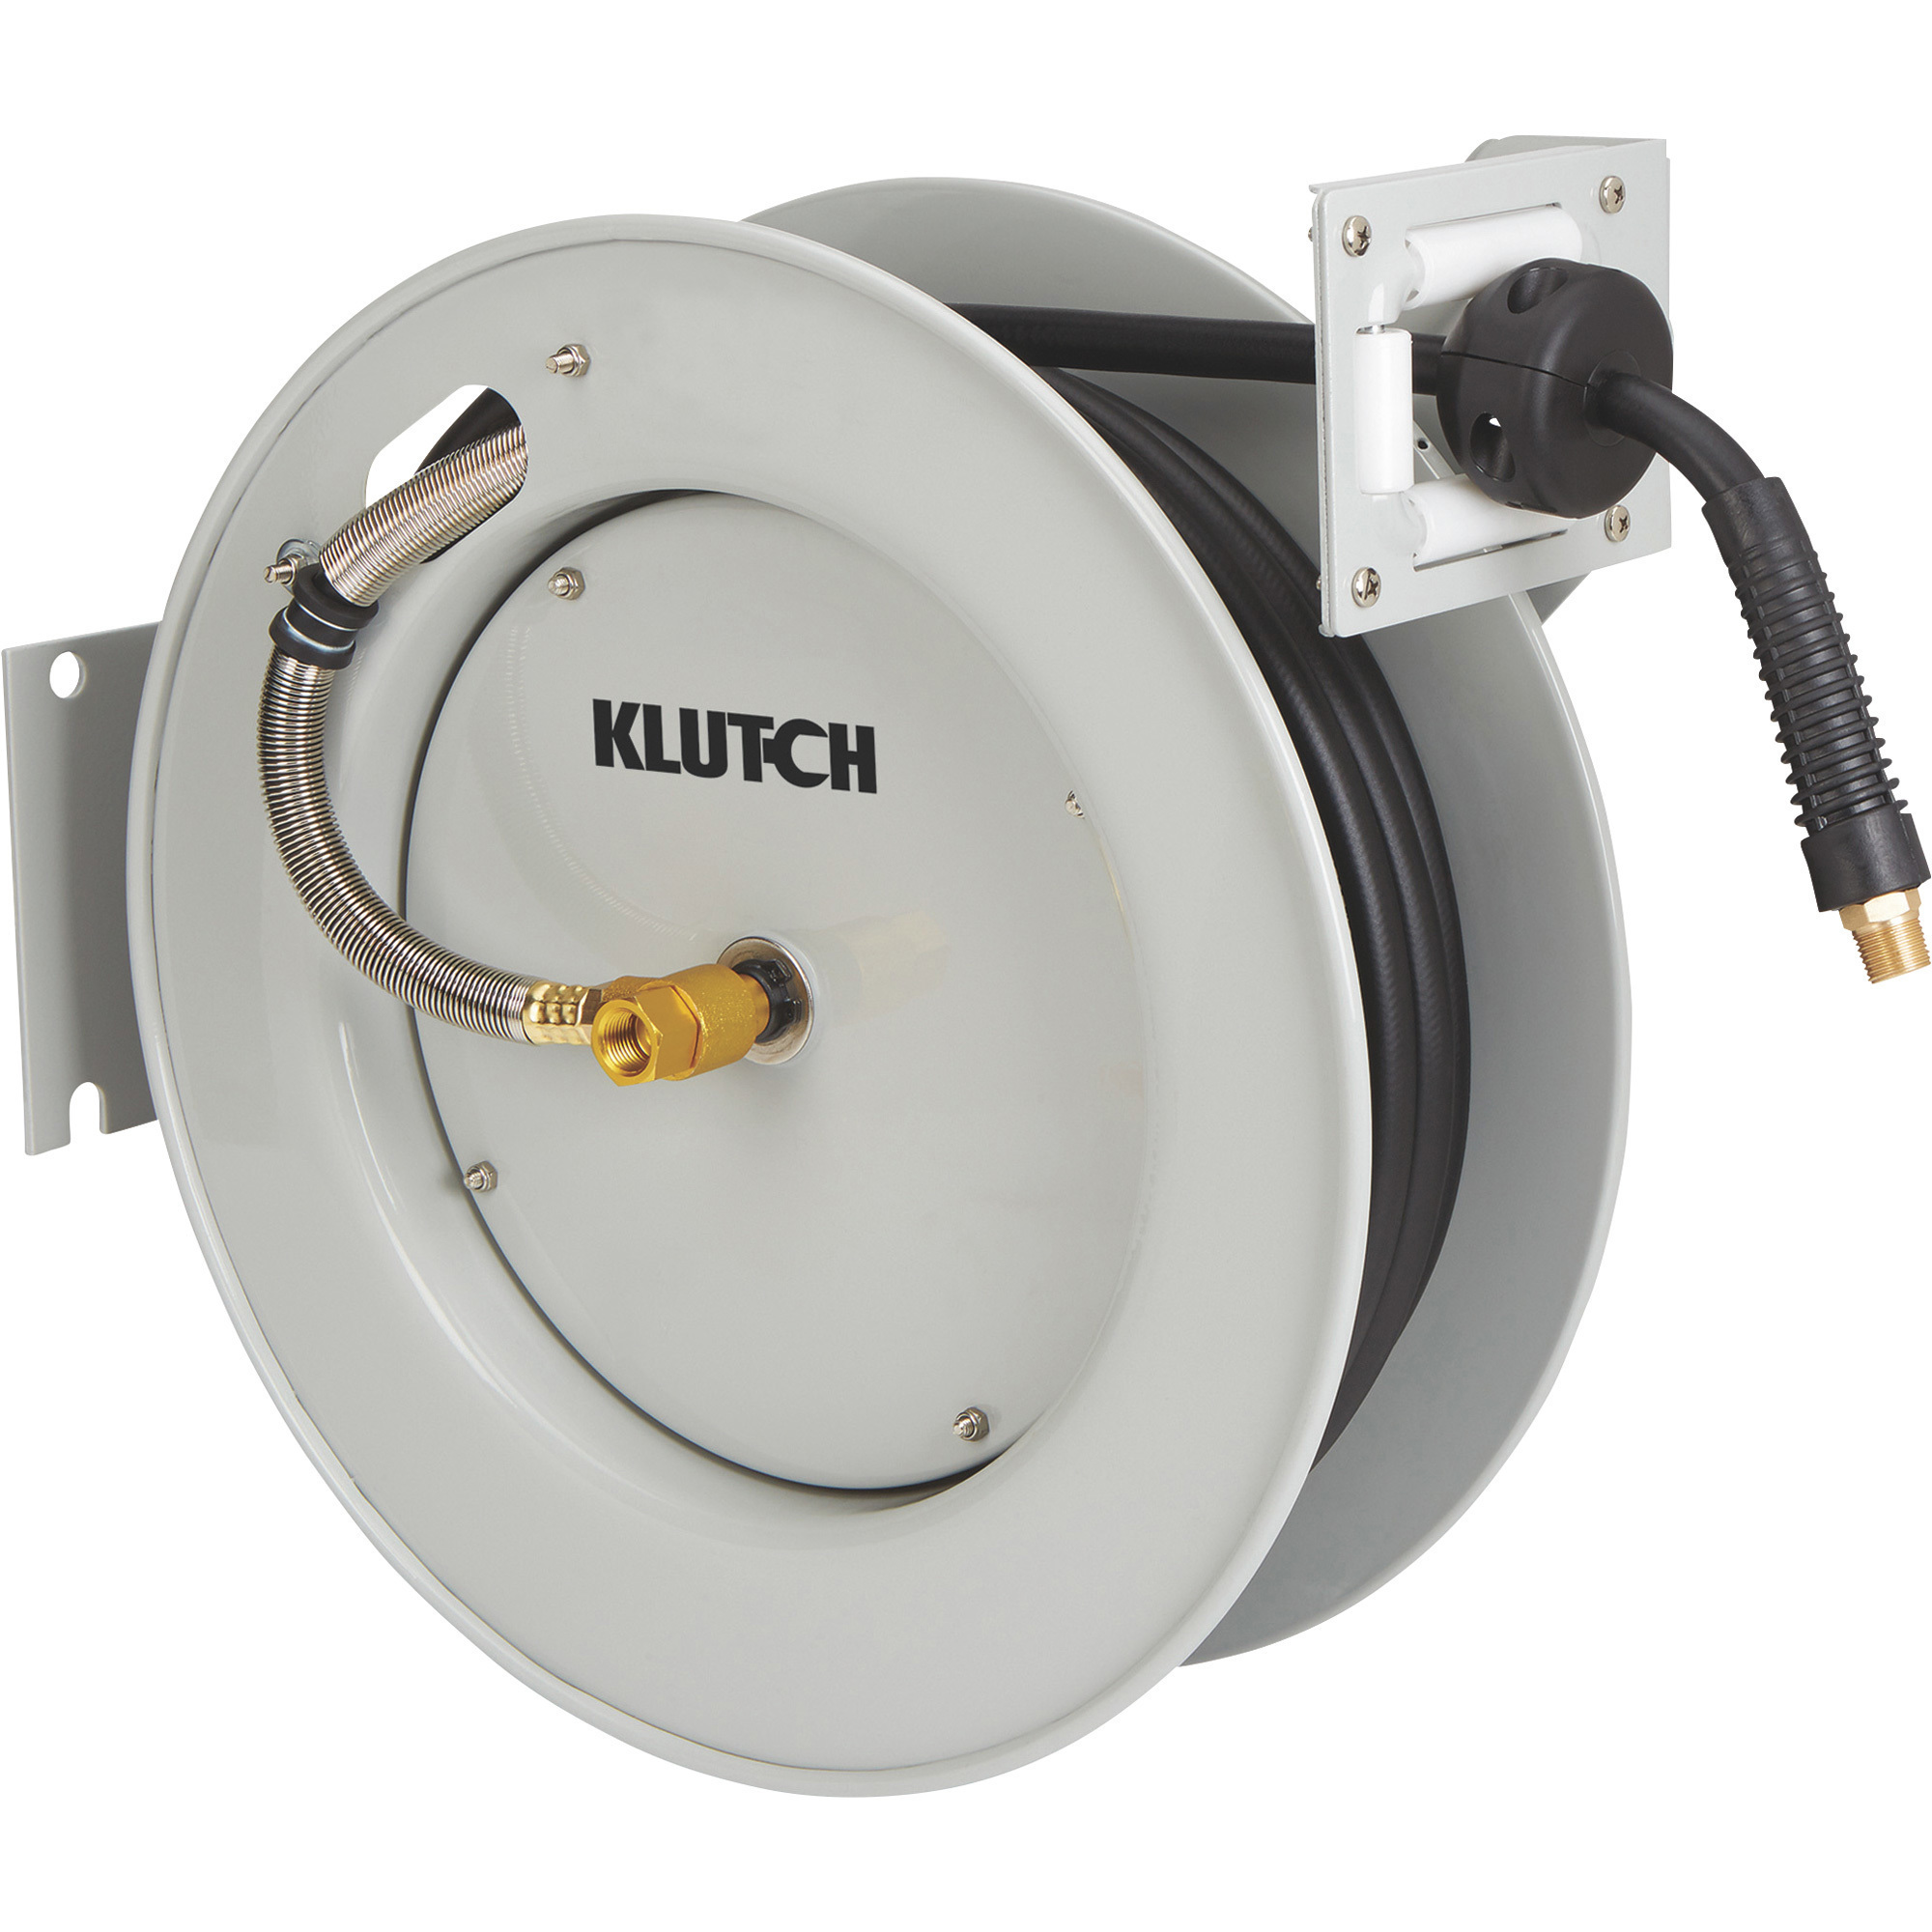 Klutch Auto-Rewind Air Hose Reel, with 3/8in. x 50ft. Hybrid